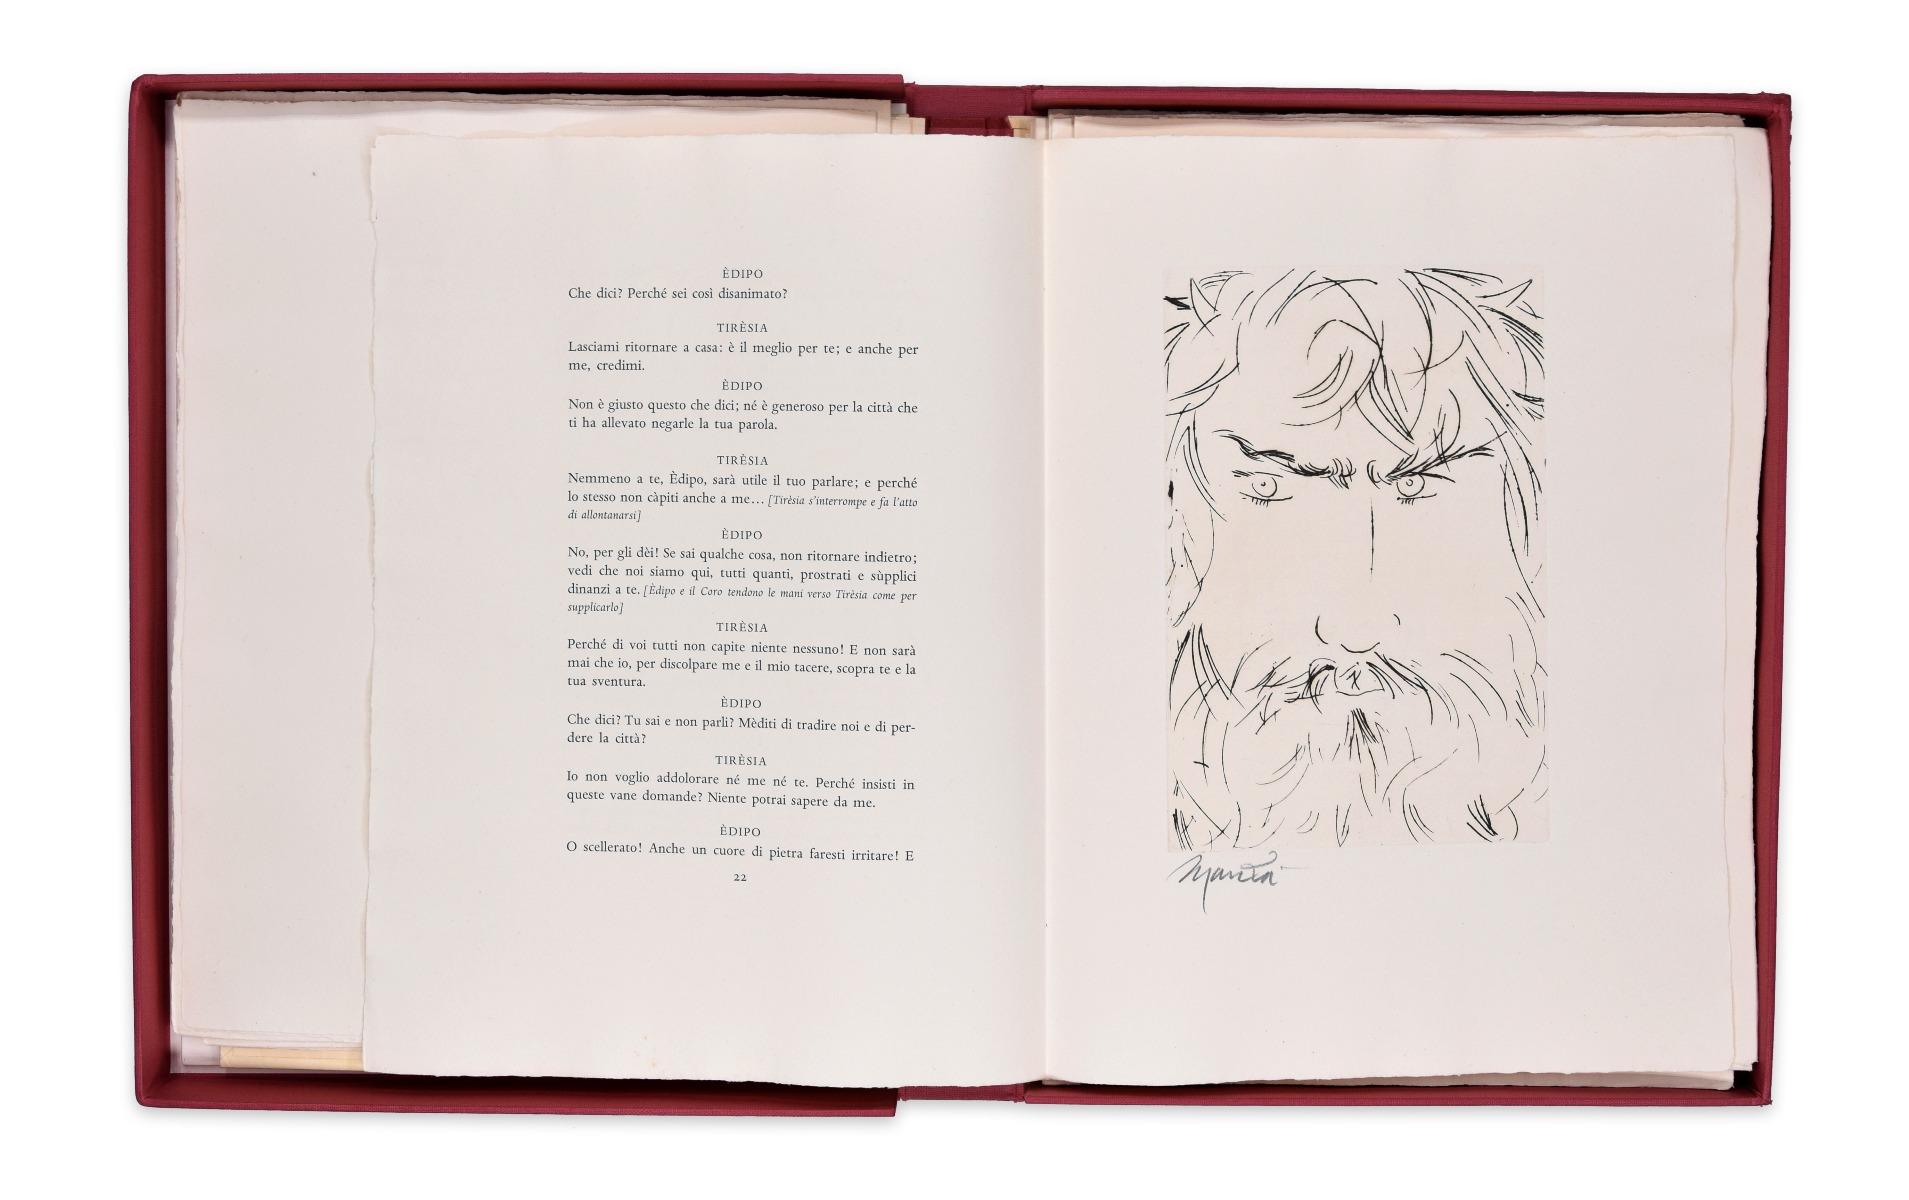 King Oedipus - Rare Book Illustrated by Giacomo Manzù - 1968 - Art by Manara Valgimigli, Giacomo Manzù